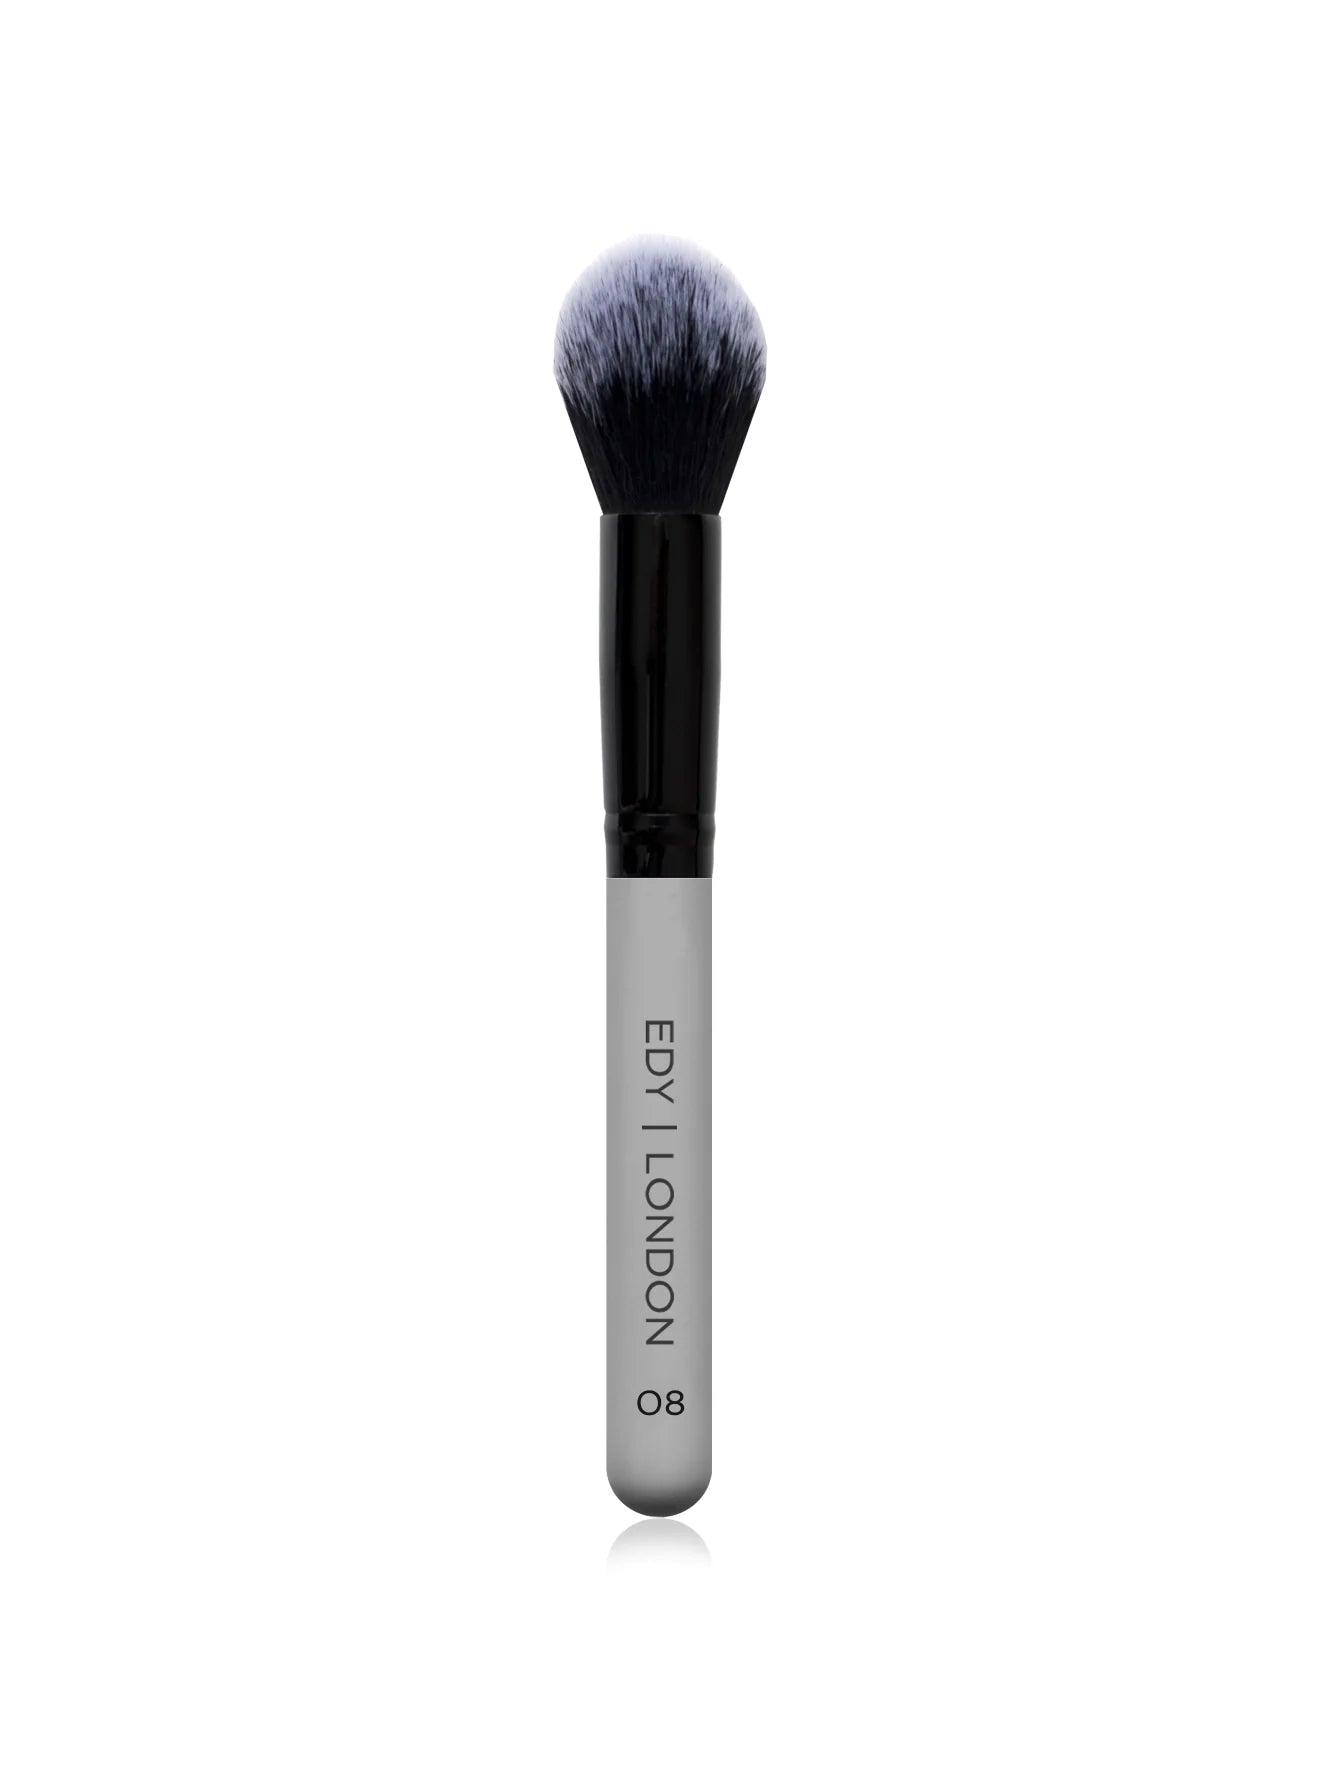 Small Tapered Blush Brush 08 Make-up Brush EDY LONDON Cool Grey   - EDY LONDON PRODUCTS UK - The Best Makeup Brushes - shop.edy.london